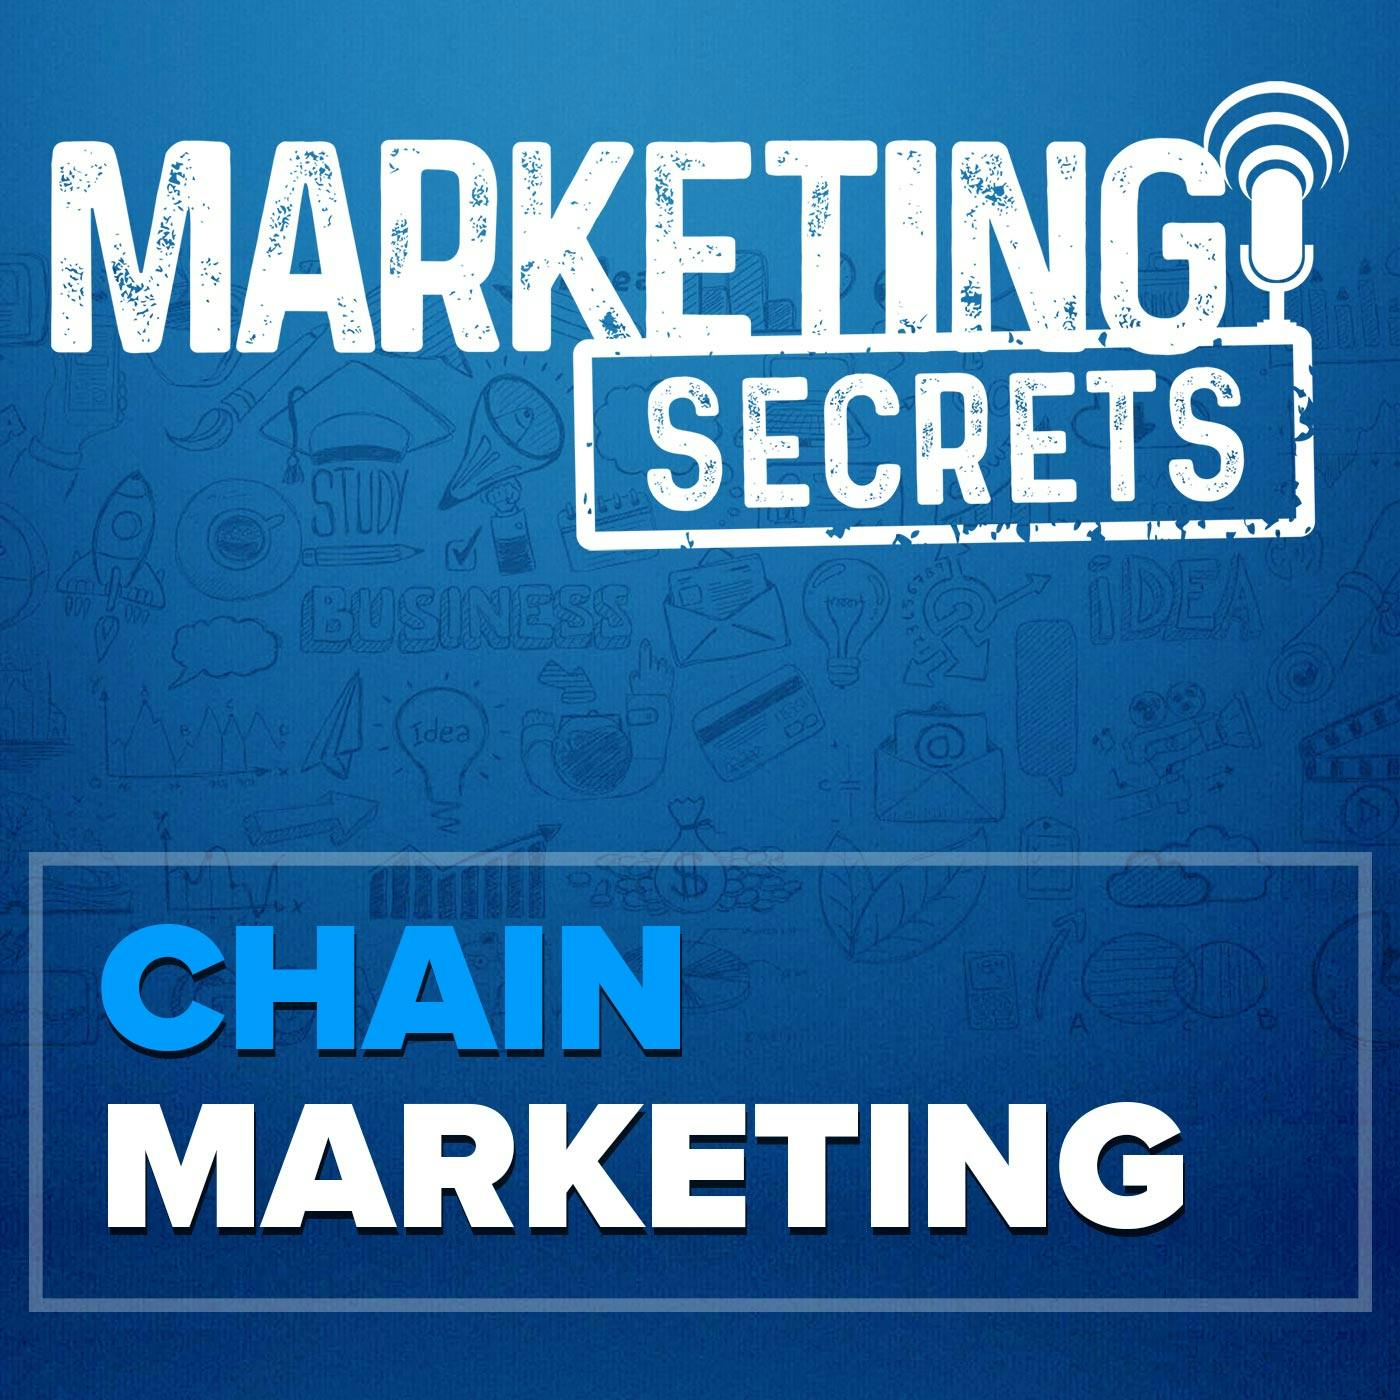 Chain Marketing